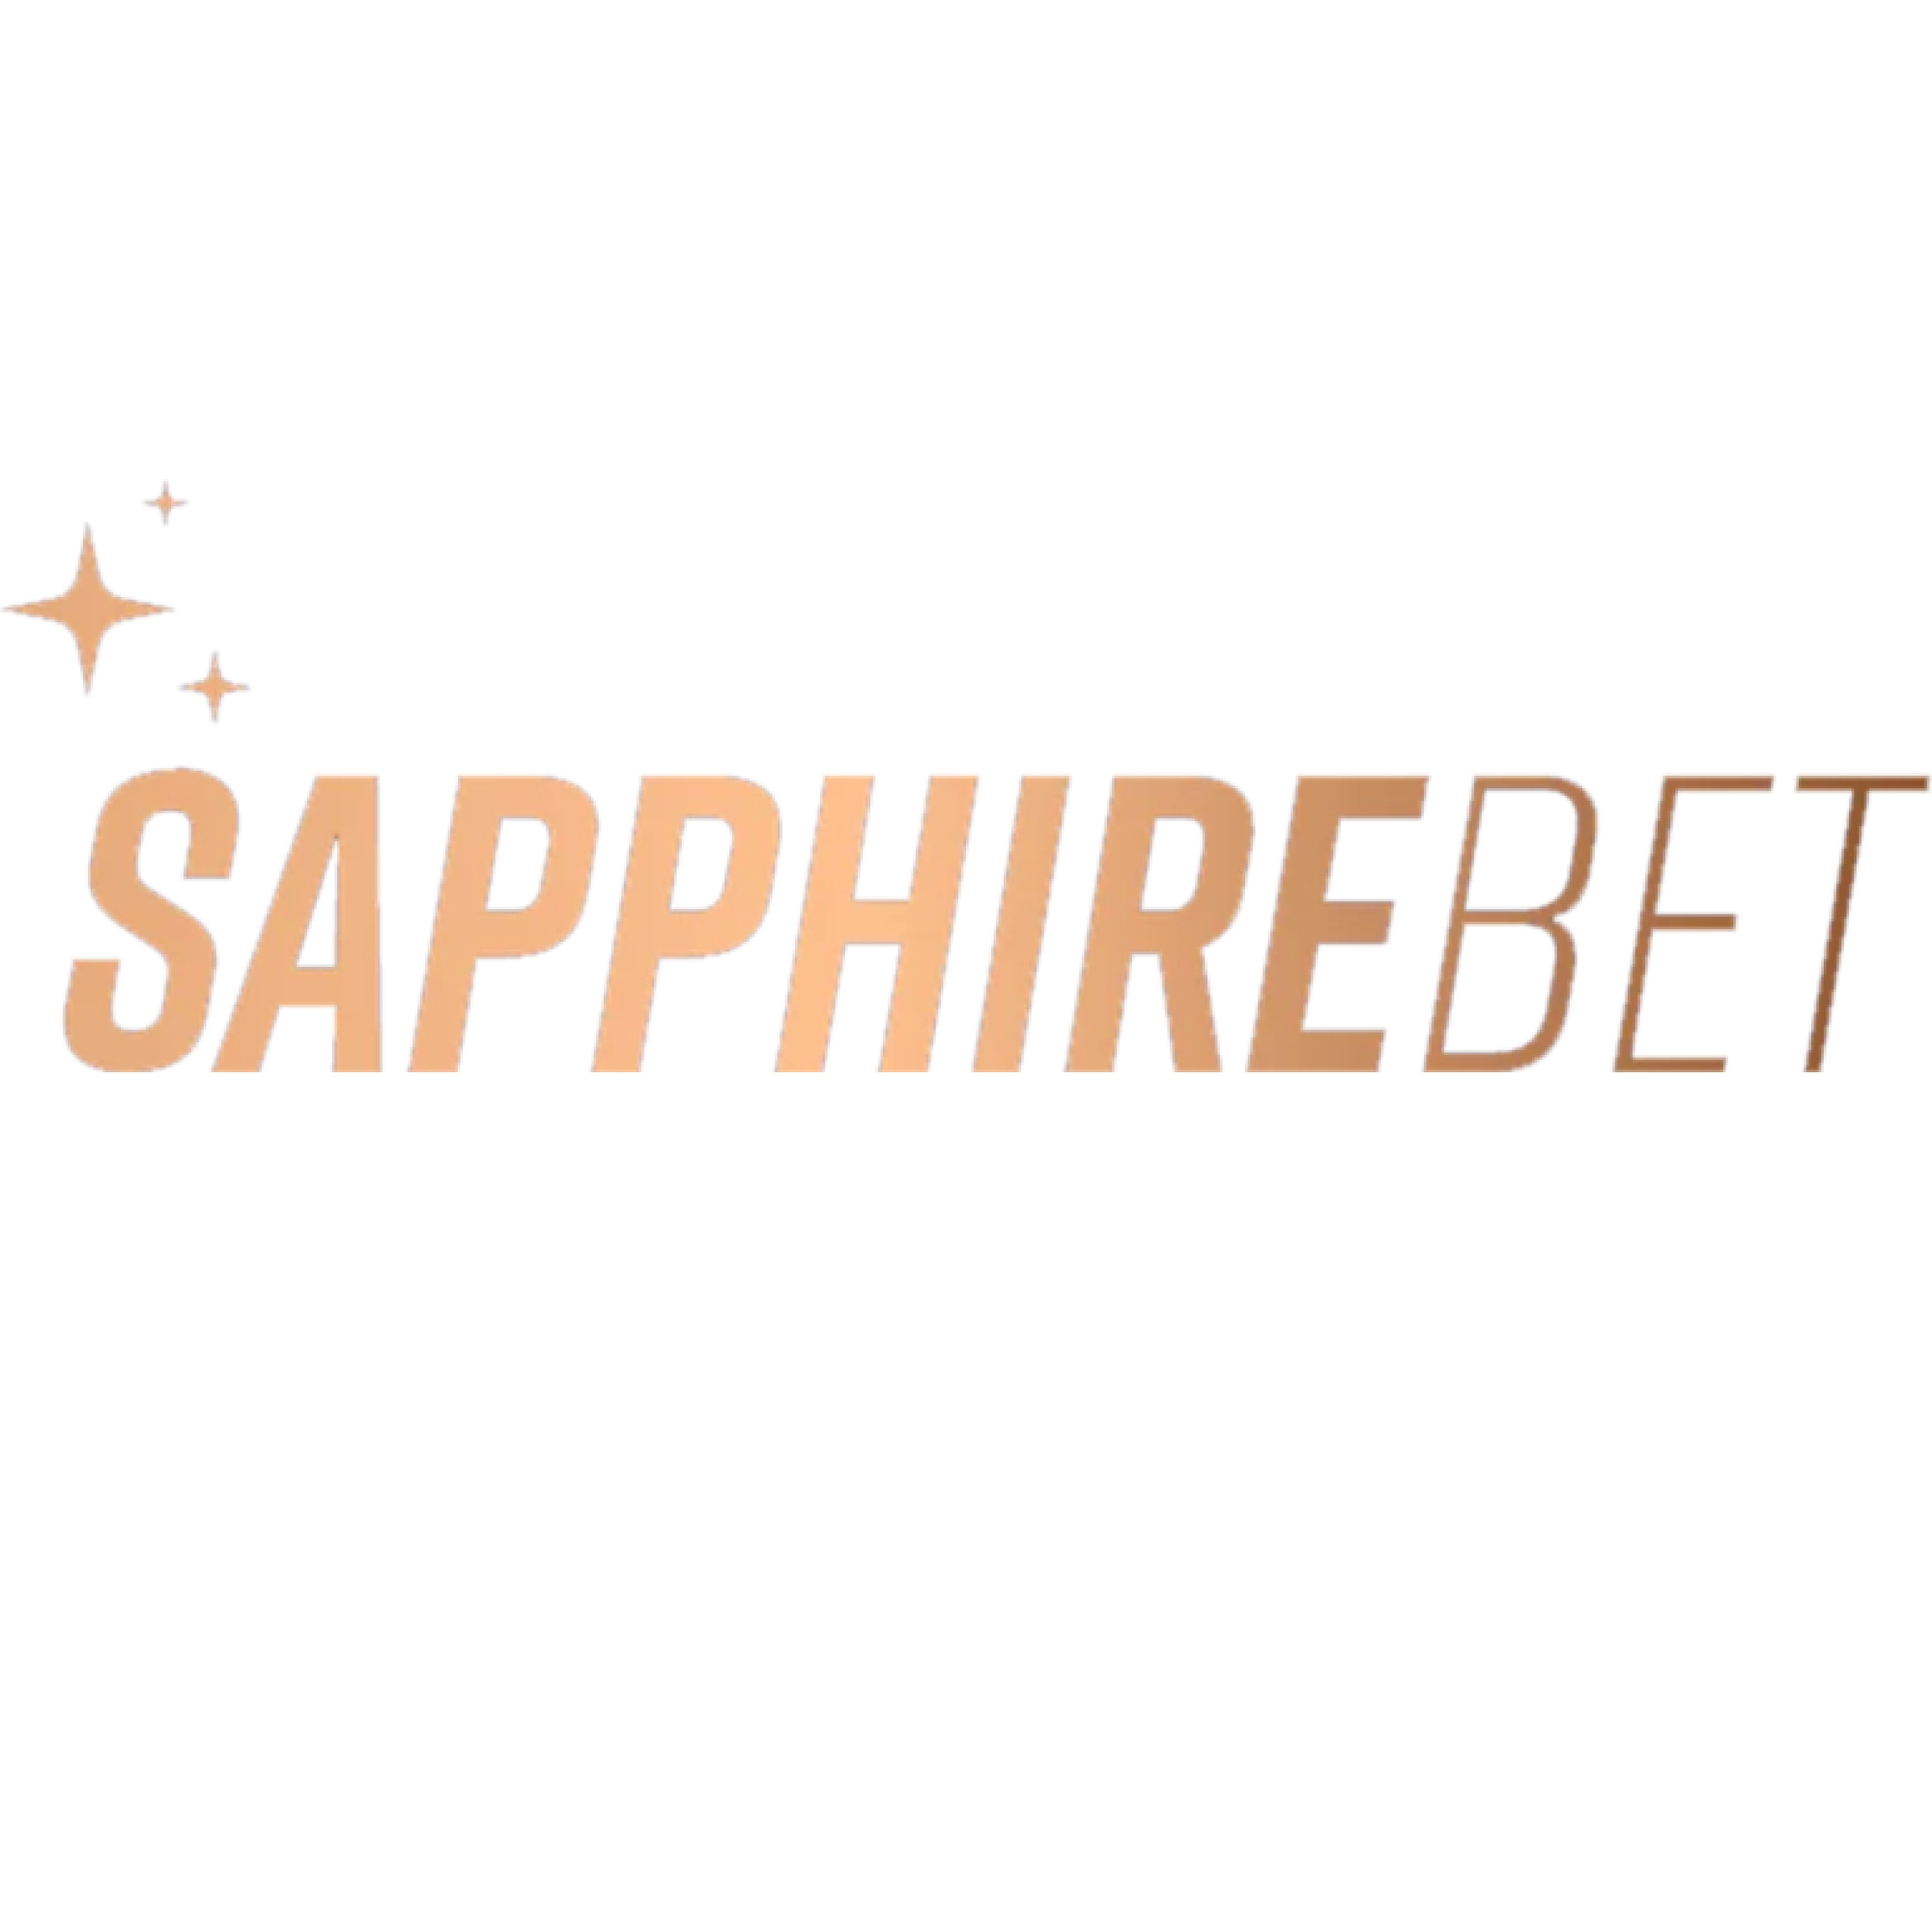 SapphireBet Review